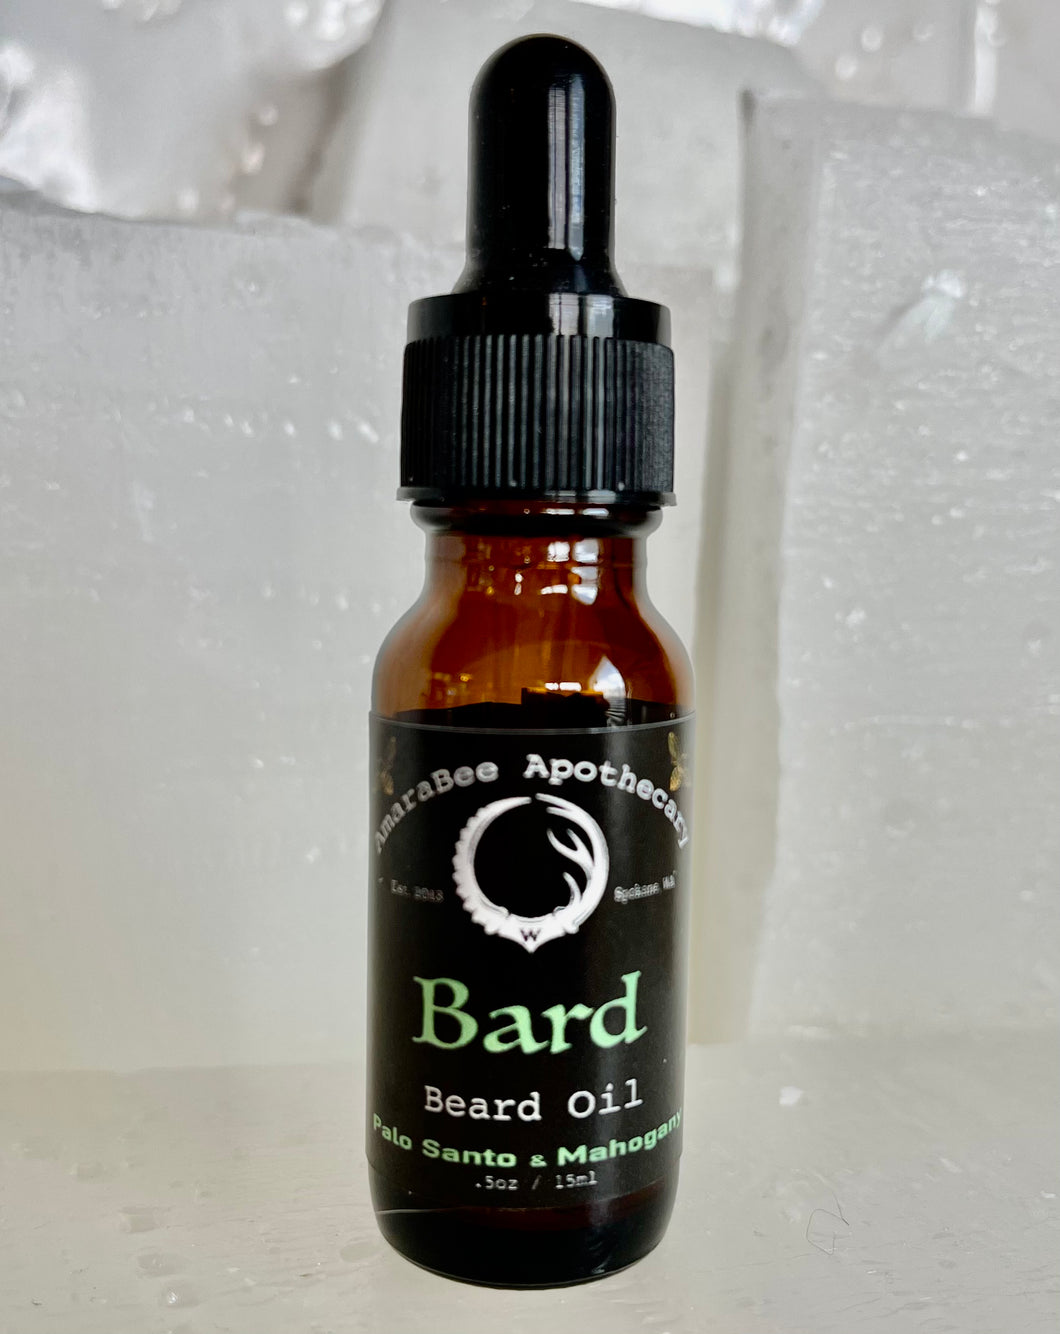 Bard Beard Oil | Warlock by AmaraBee Apothecary | Men’s Hair Care | Natural